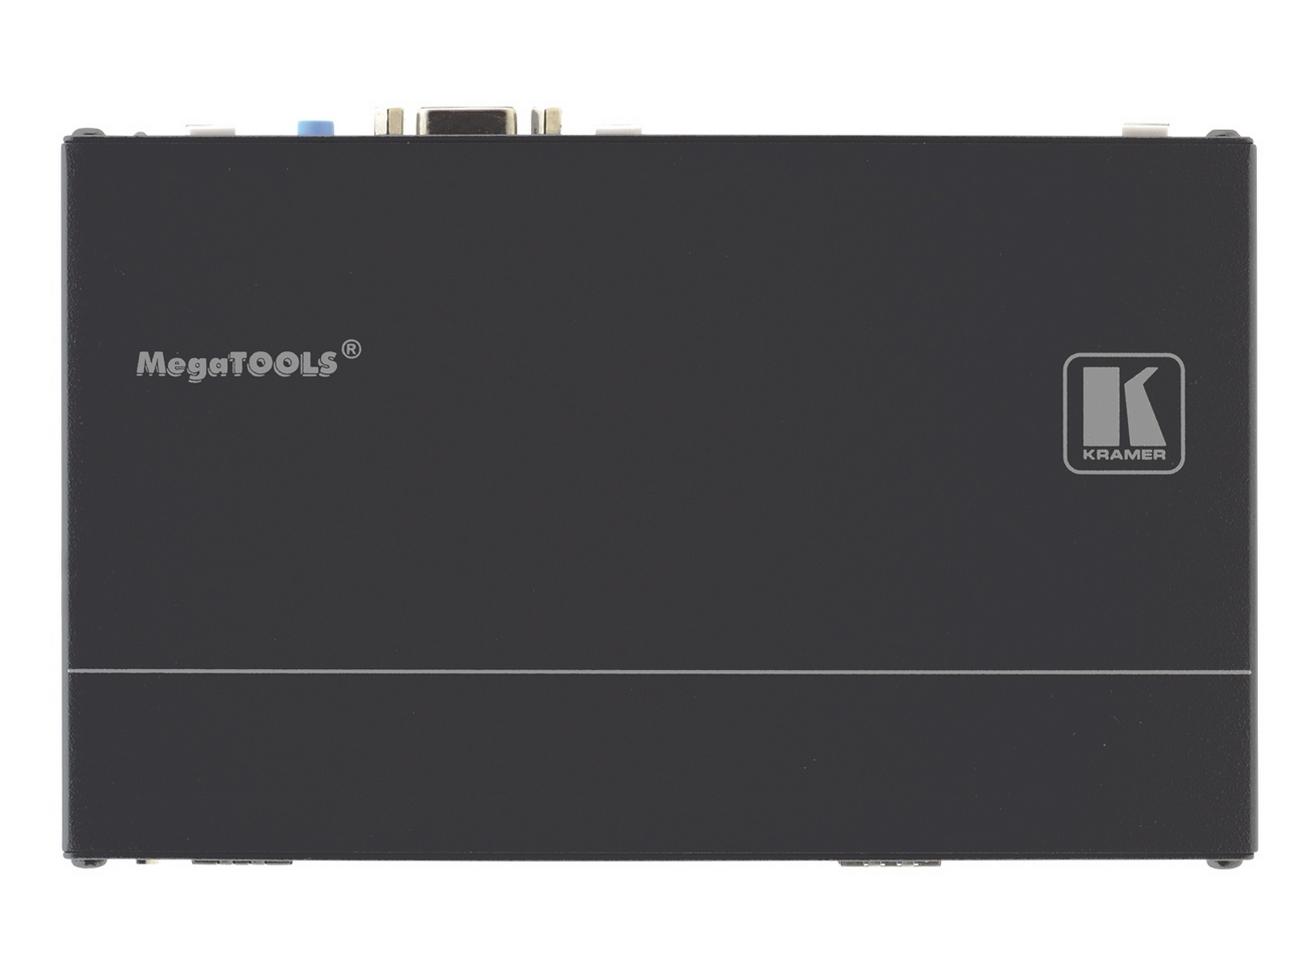 Kramer DIP-20 HDMI/XGA with Ethernet/Bidirect RS-232 over HDBaseT Extender (Transmitter)